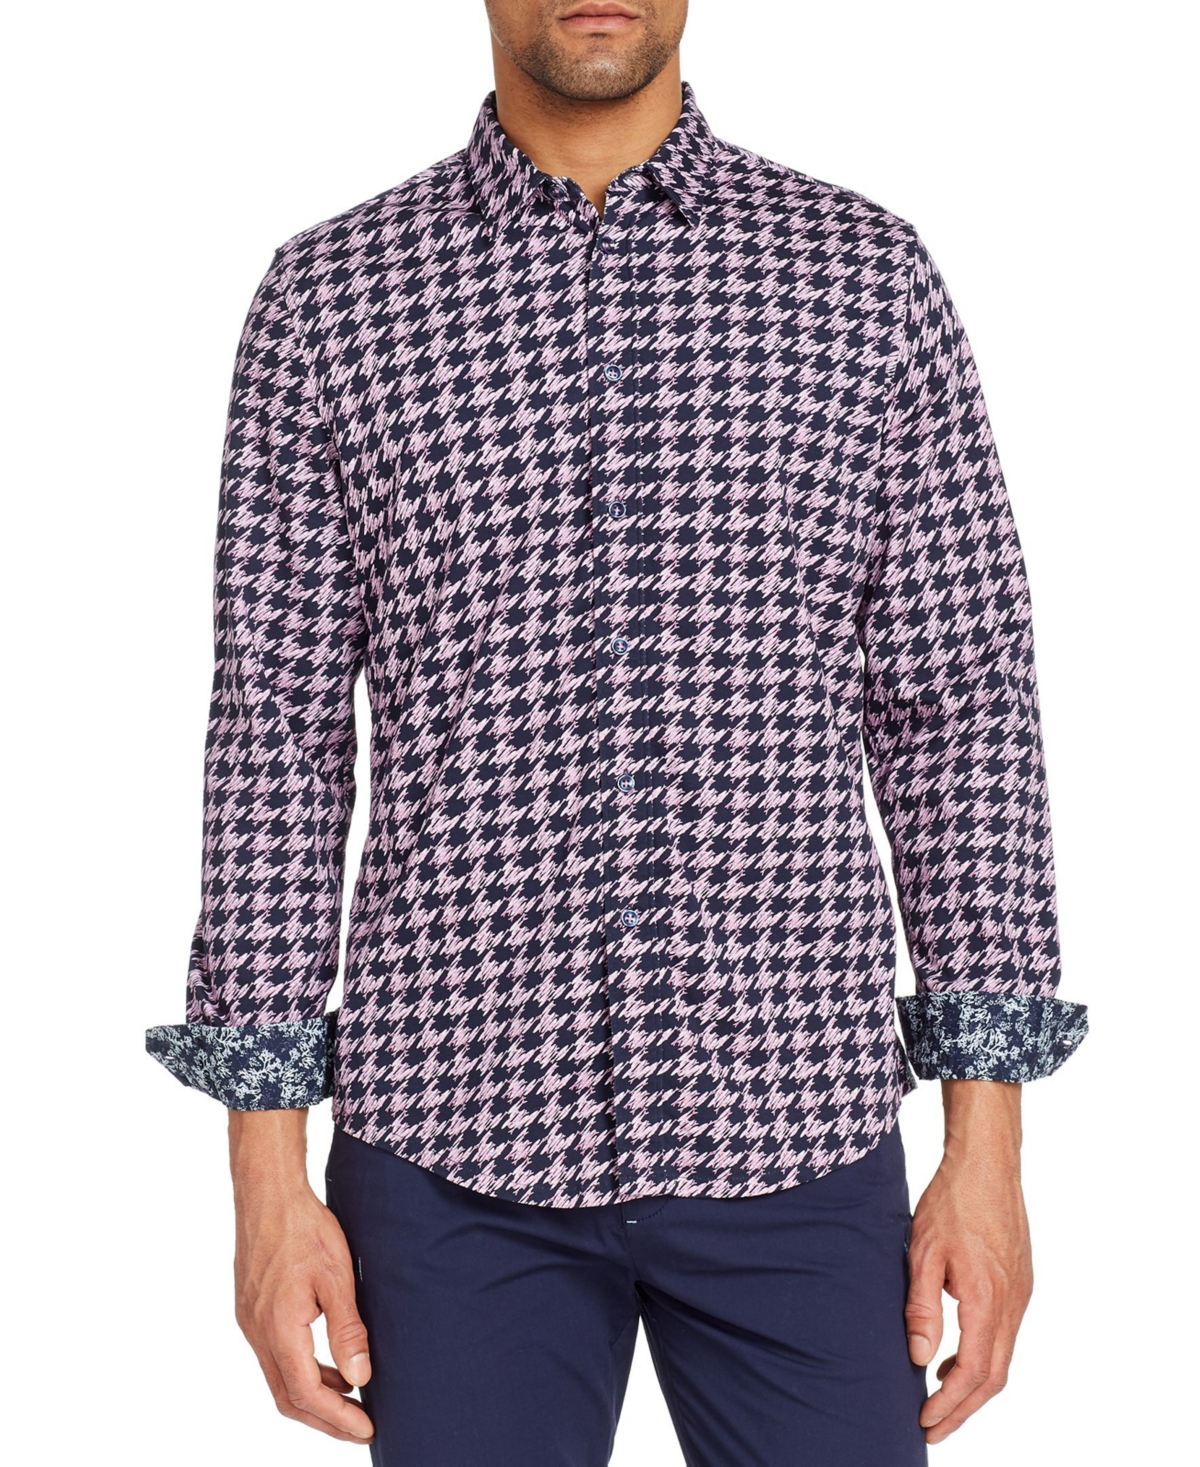 Men's Slim-Fit All Knit Queensland Long Sleeve Shirt - Navy, Pink